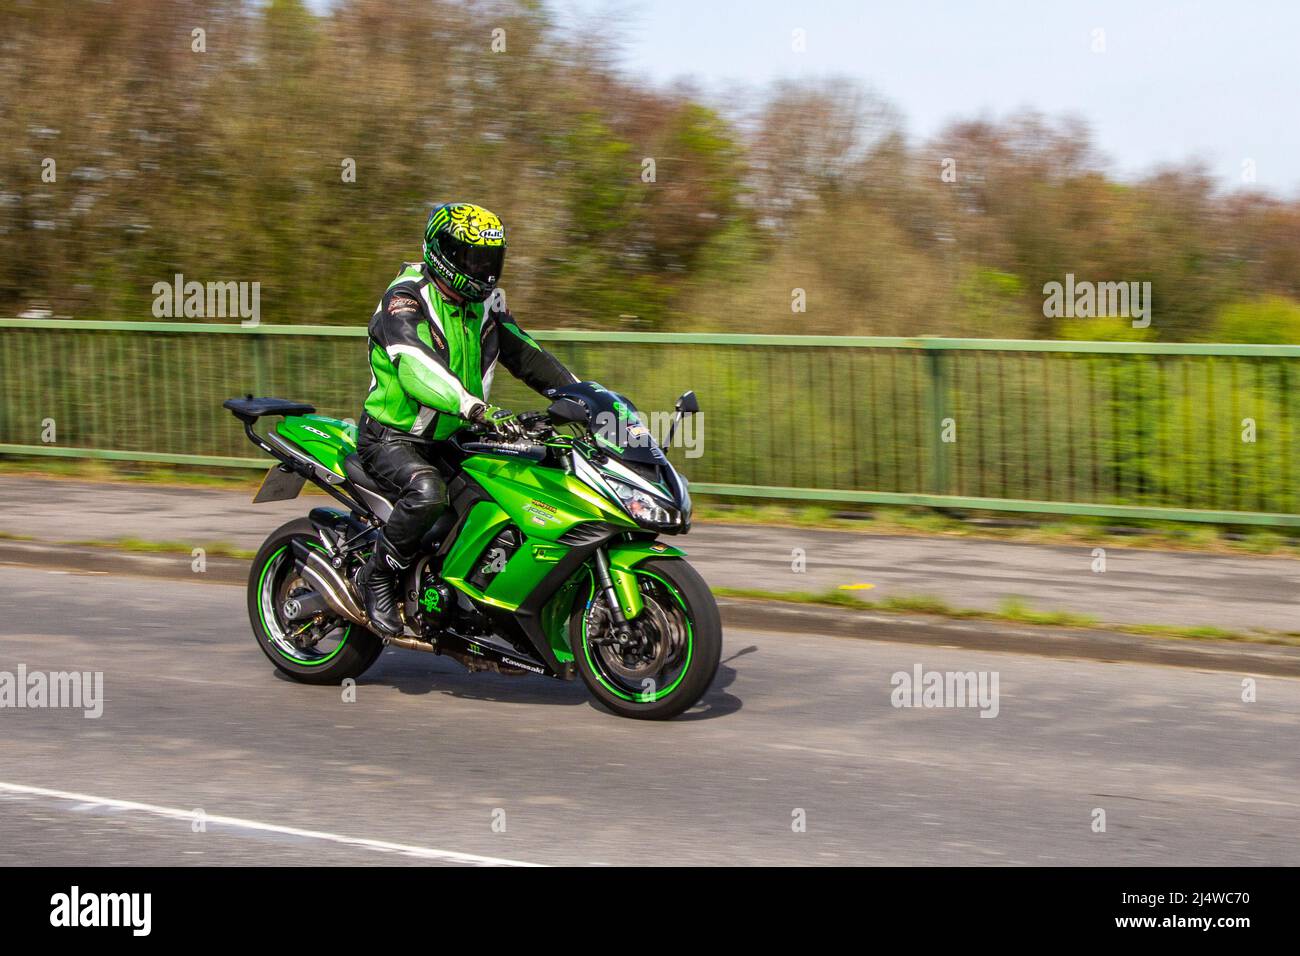 2014 Kawasaki Zx 1000 GBF Inline Four green motorcycle Sports Tourer 1043cc; Motorbike rider; two-wheeled transport, motorcycles, vehicle, roads, motorbikes, motorcycle bike riders motoring in Chorley, UK Stock Photo